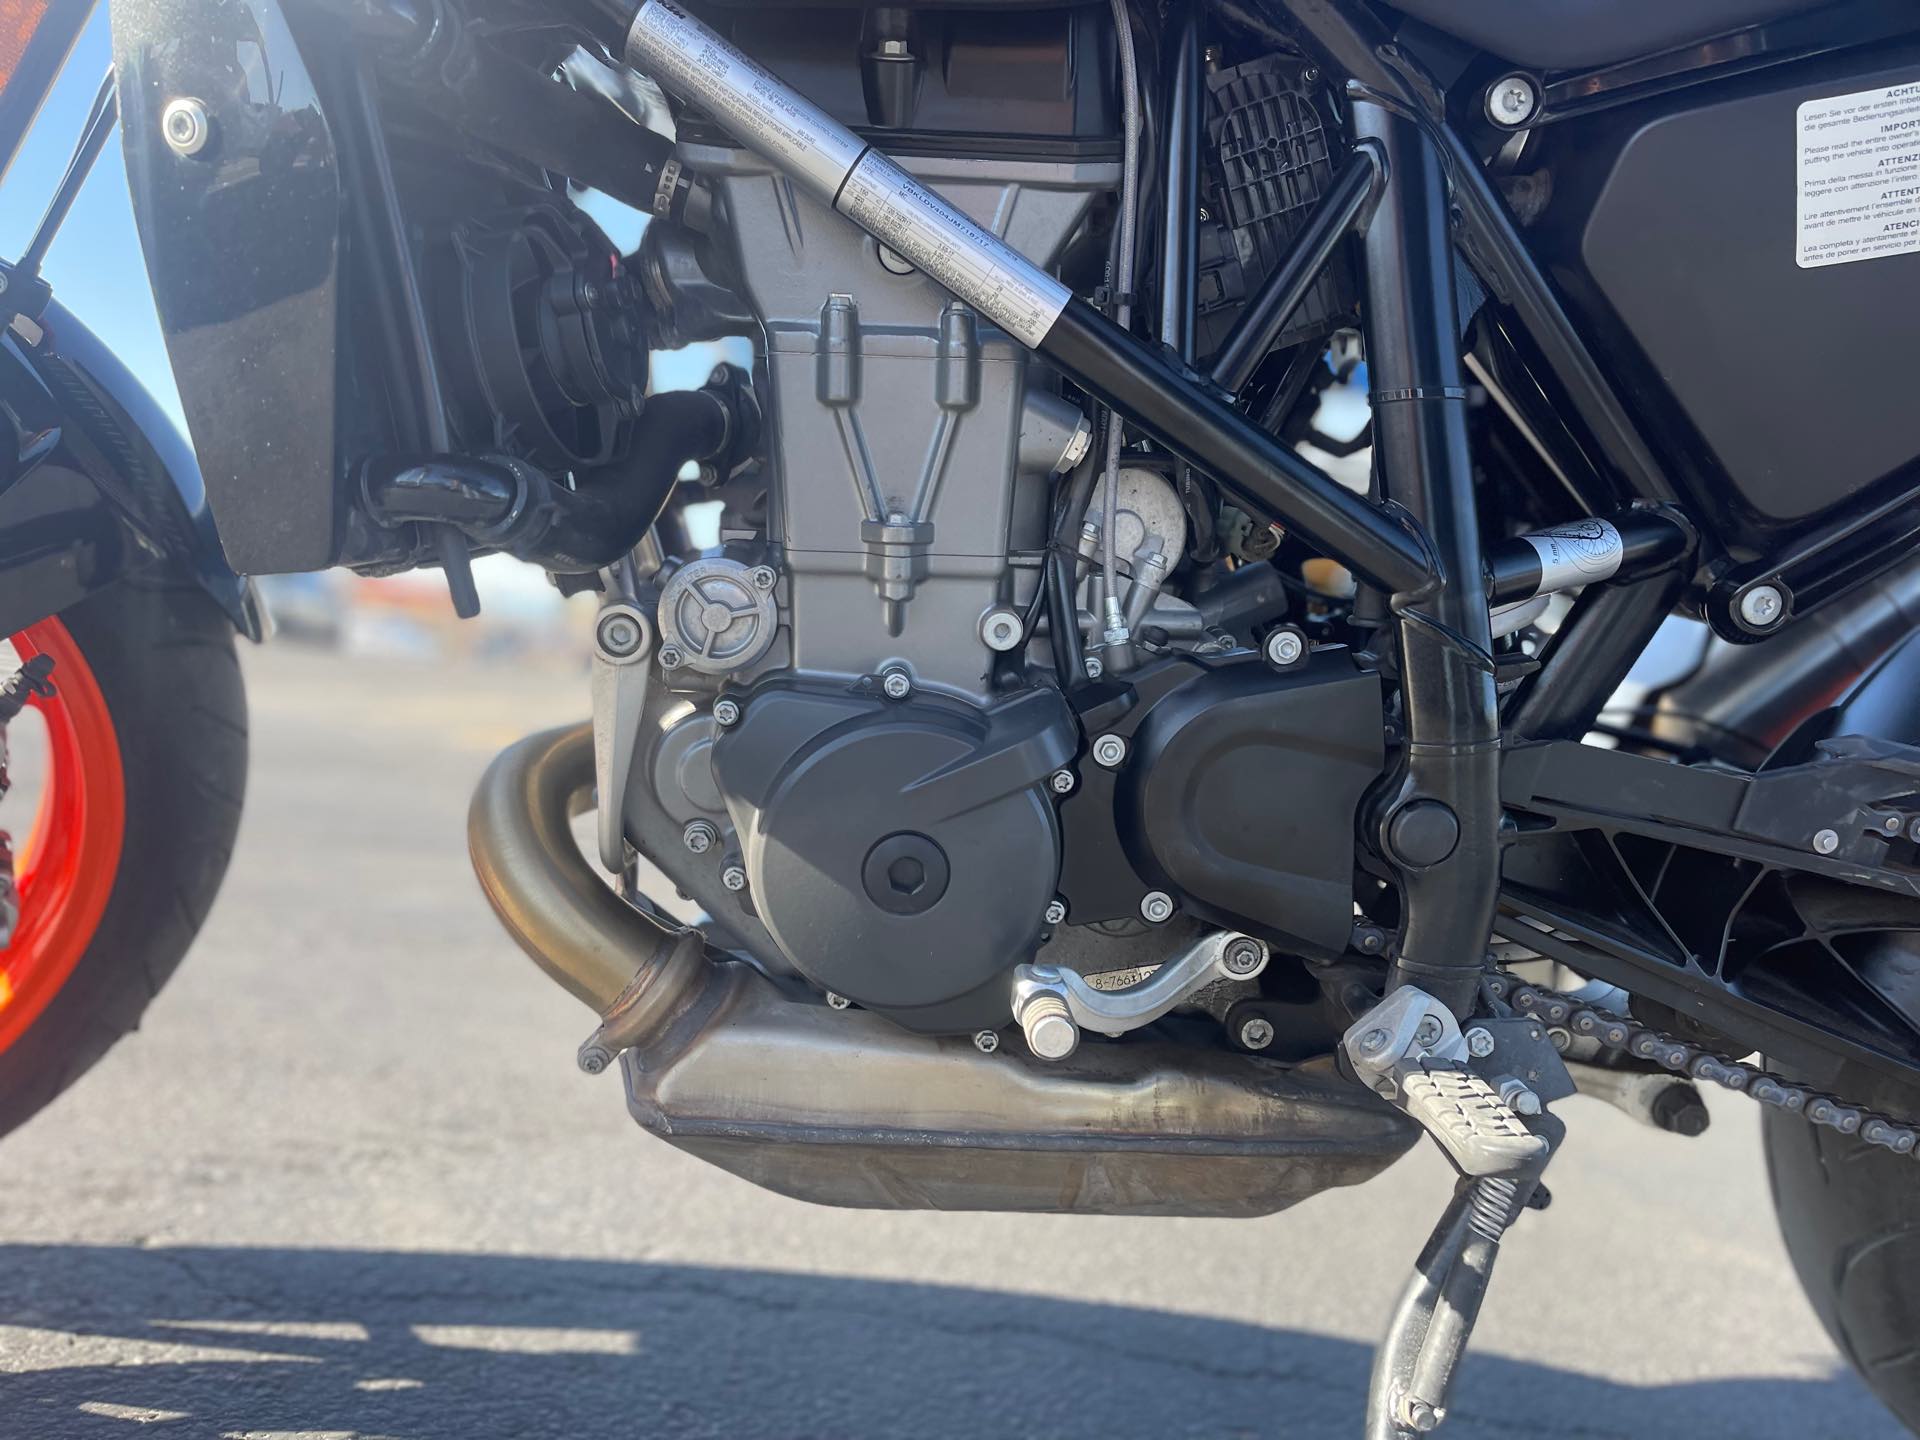 2018 KTM Duke 690 at Bobby J's Yamaha, Albuquerque, NM 87110